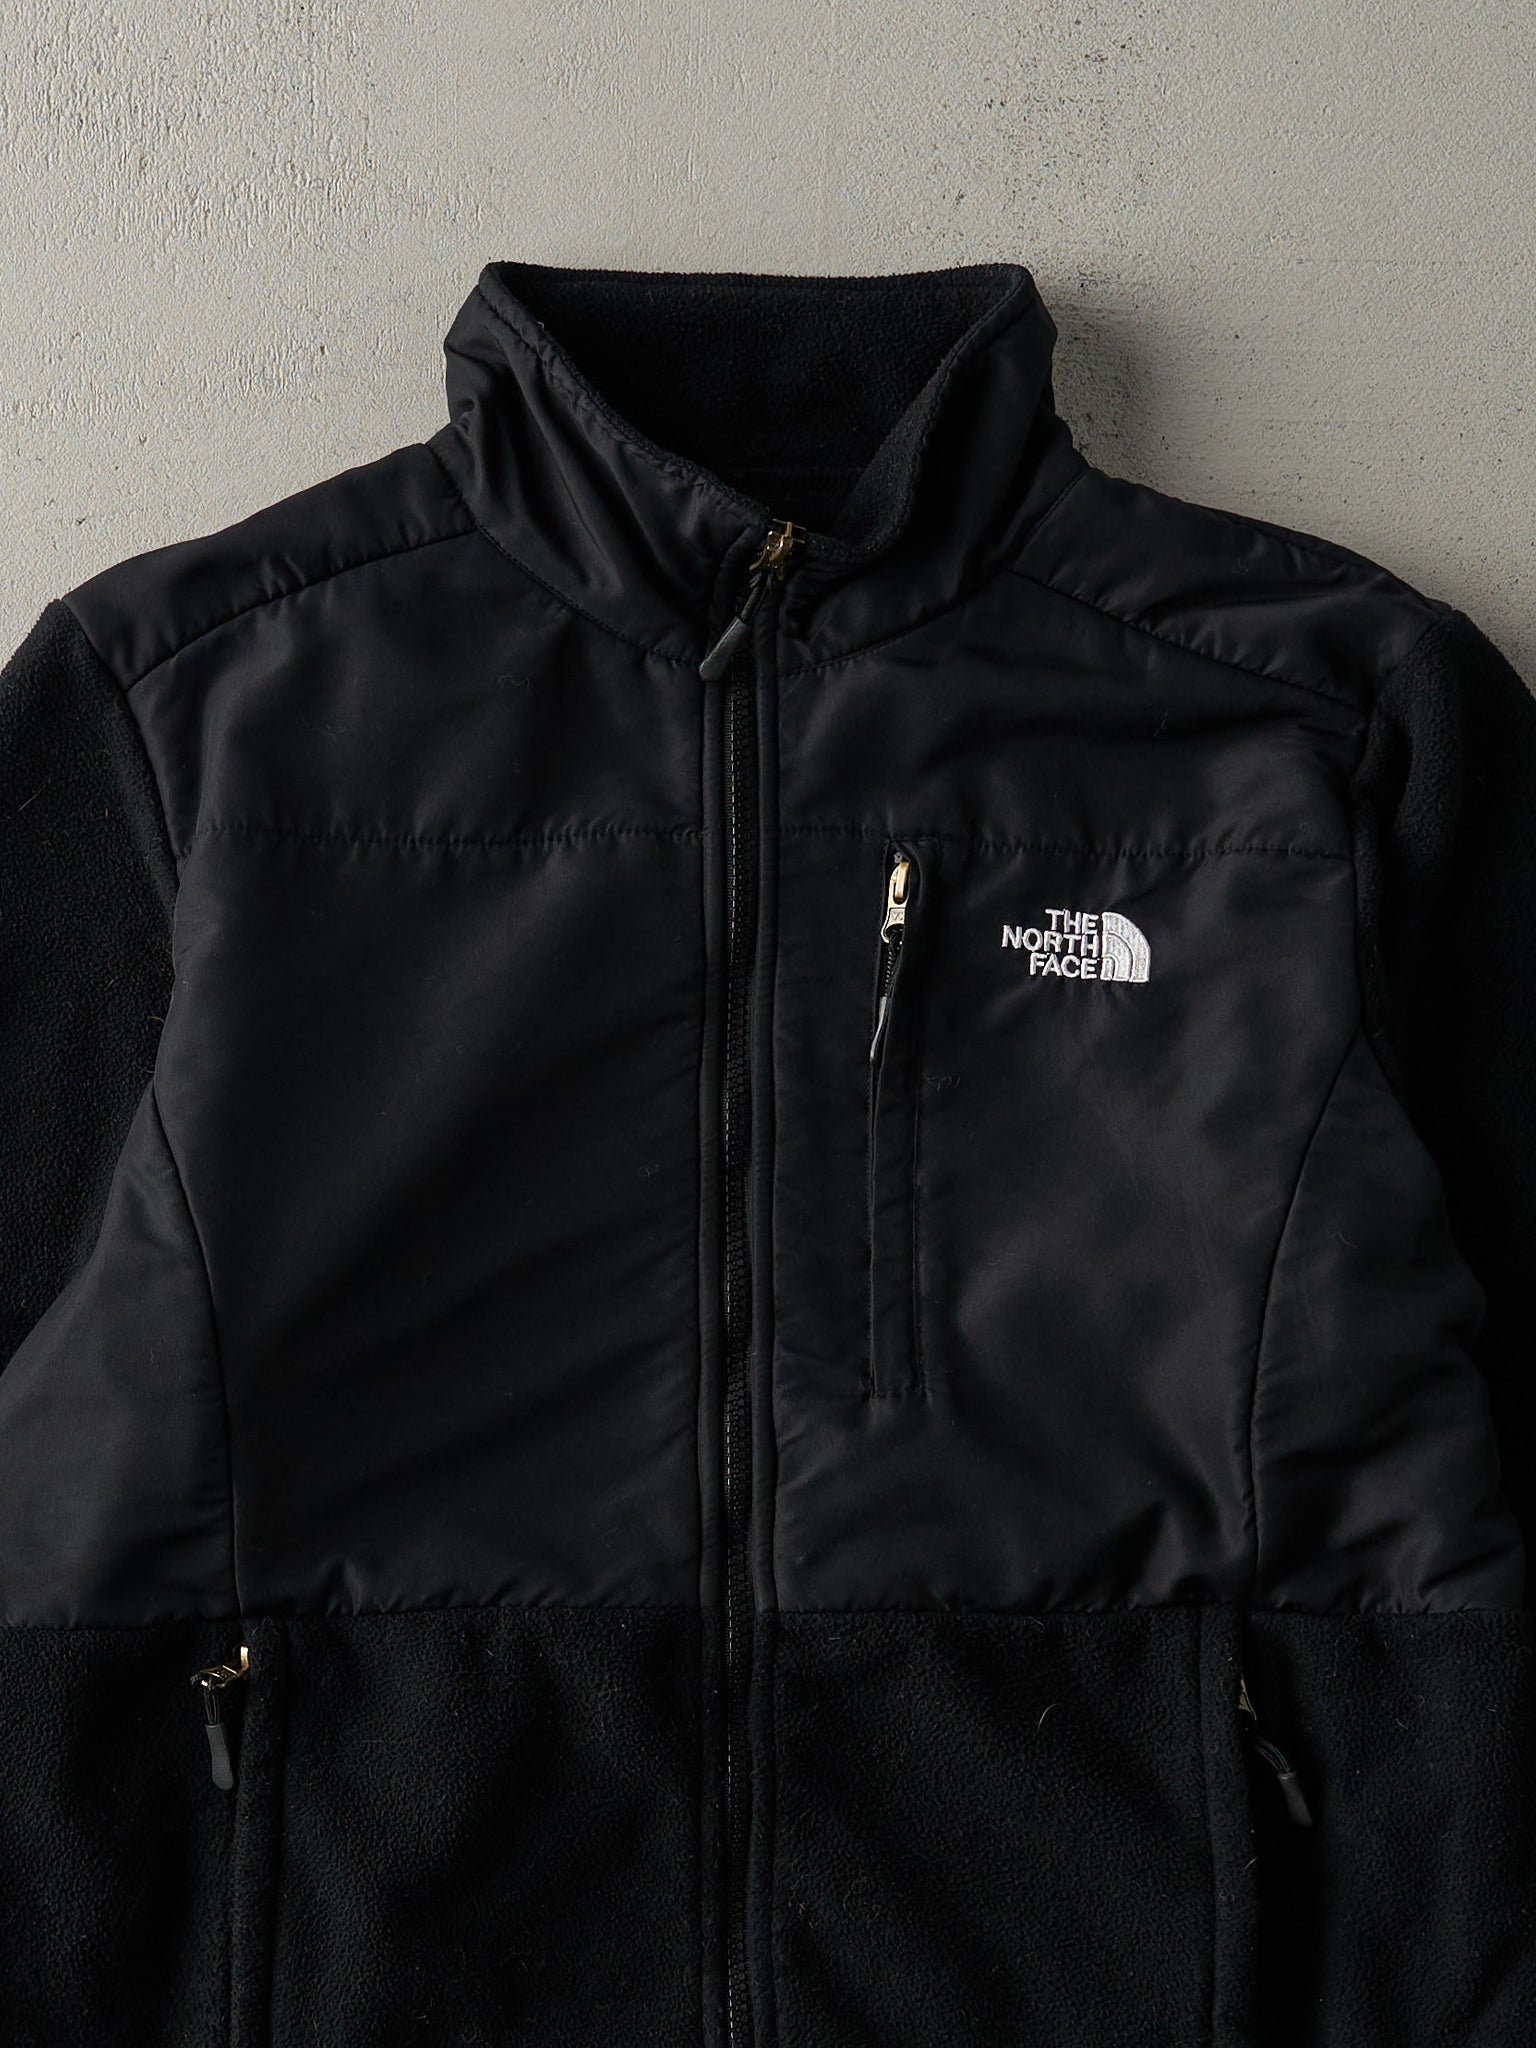 Vintage 90s Black The North Face Zip Up Fleece Jacket (S/M)